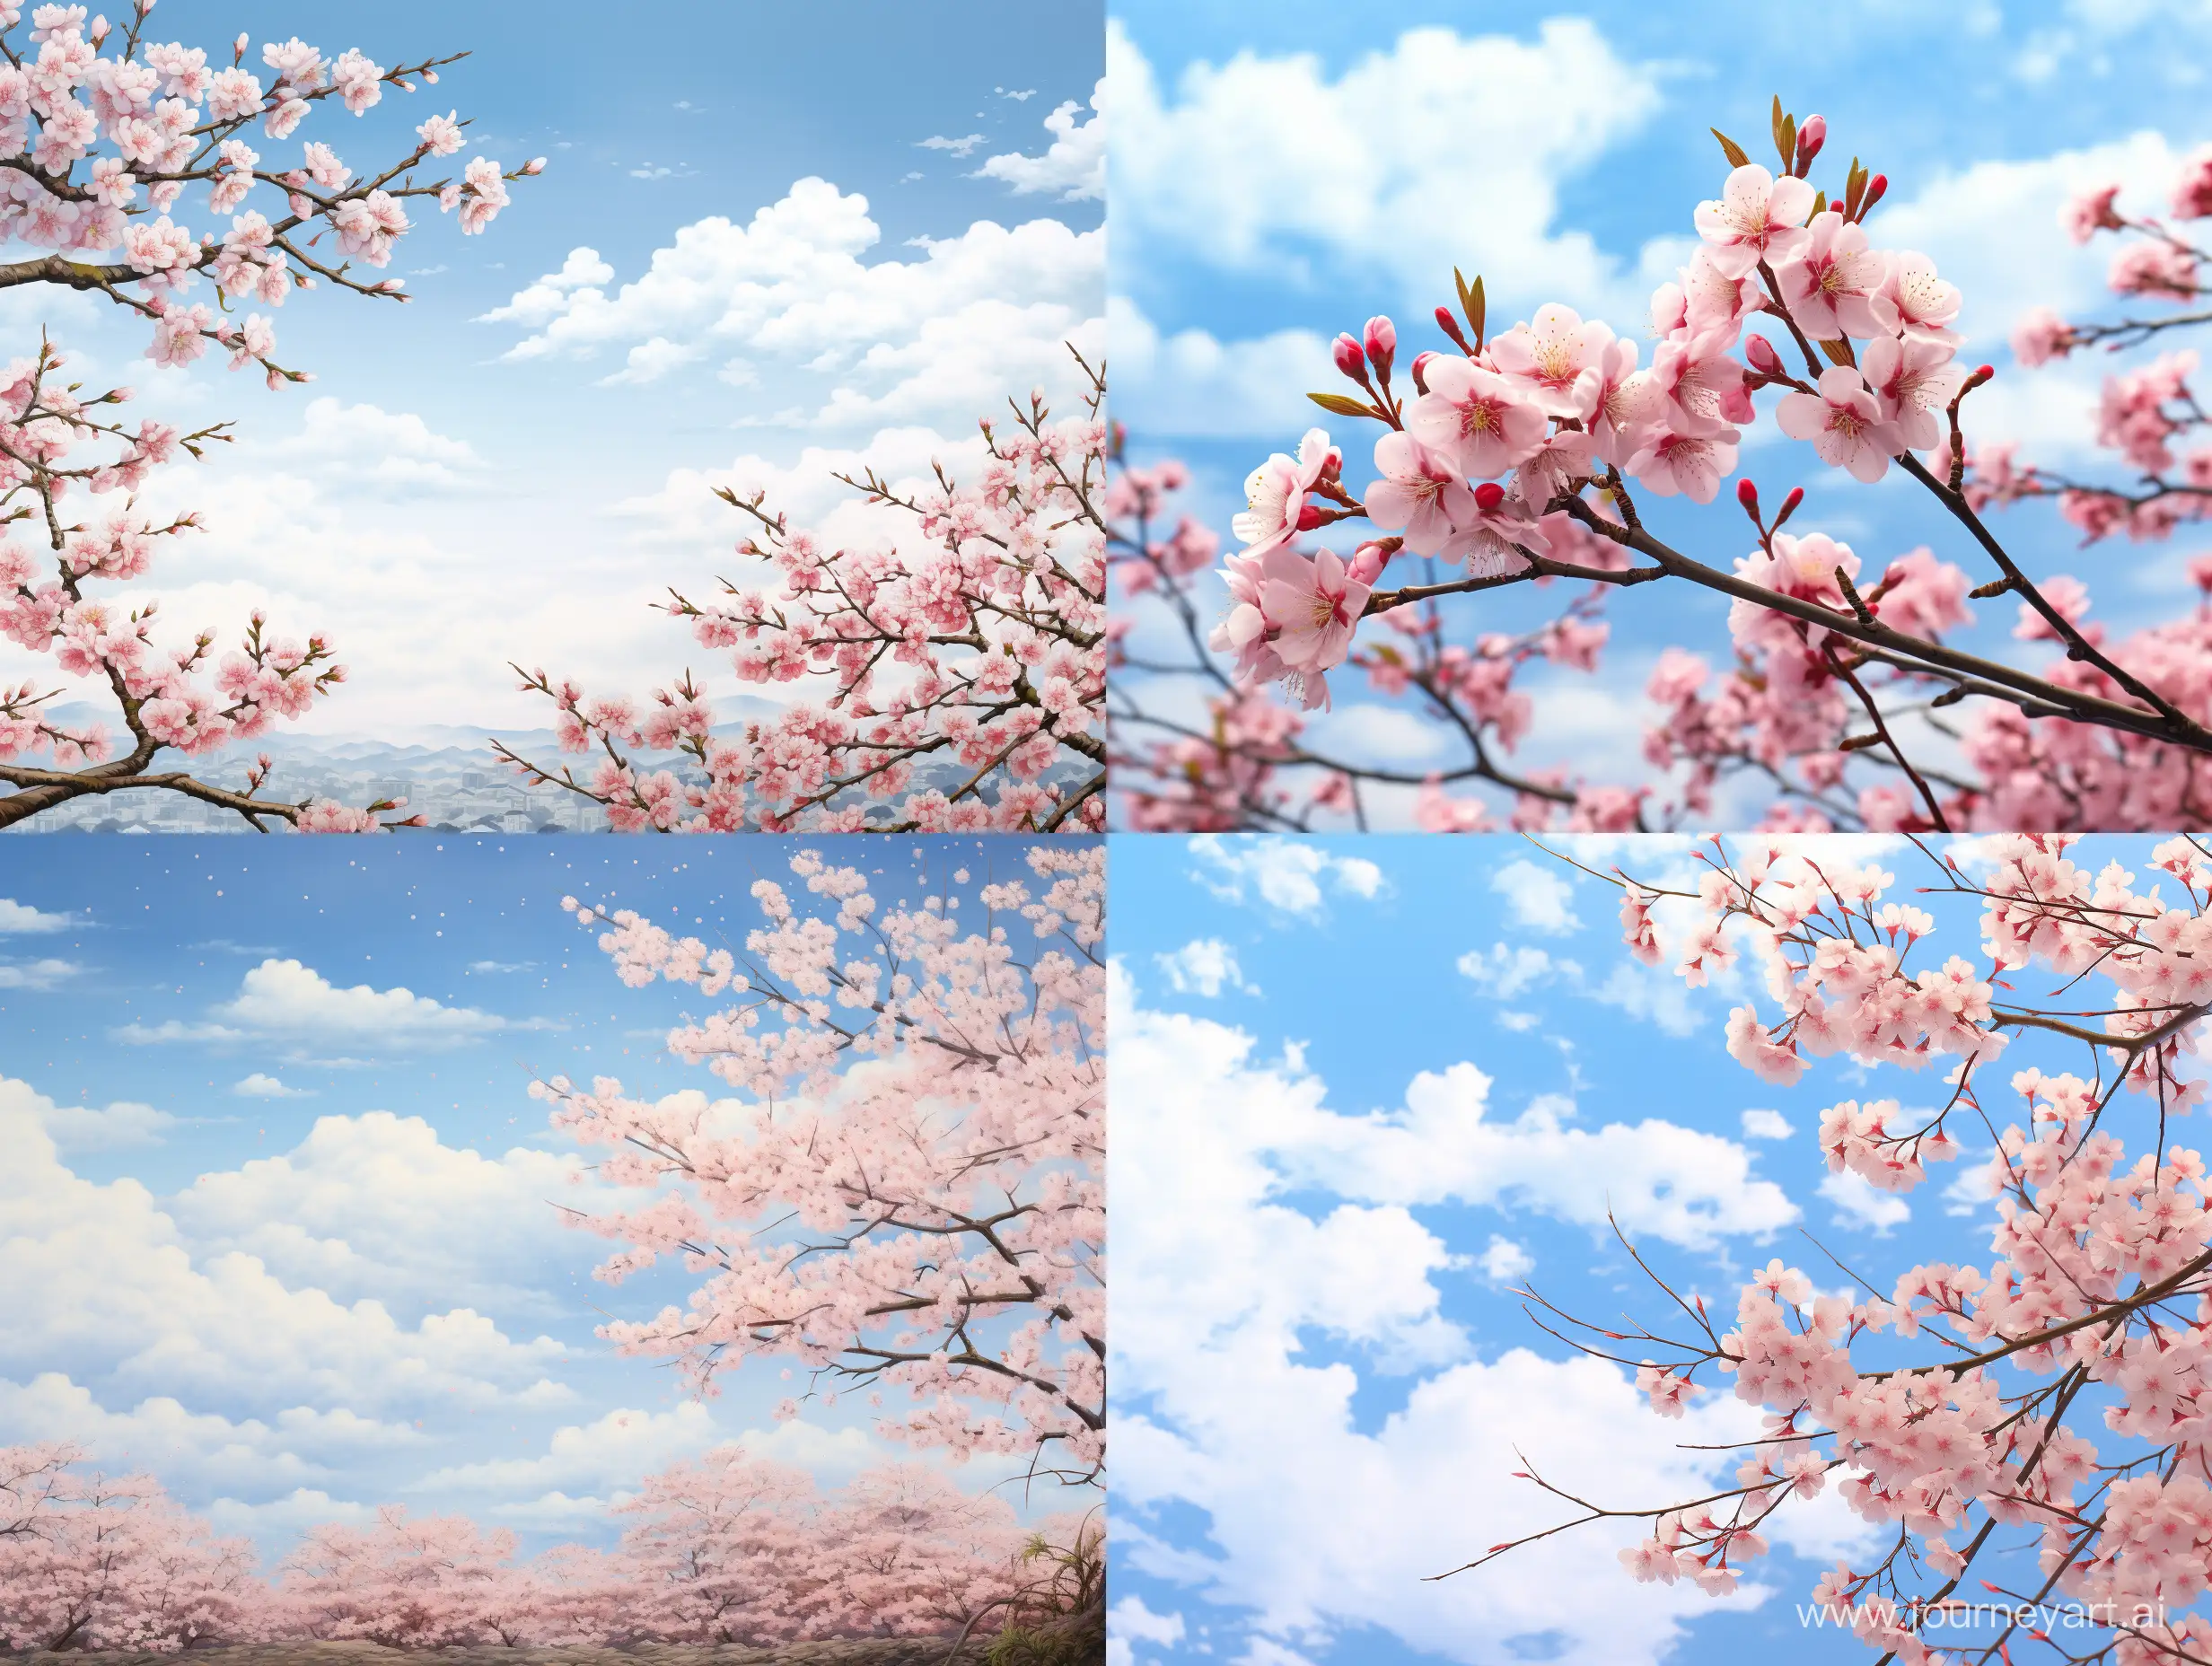 Tranquil-Cherry-Blossom-Sky-Realistic-Photography-with-Blossom-Adorned-Horizon